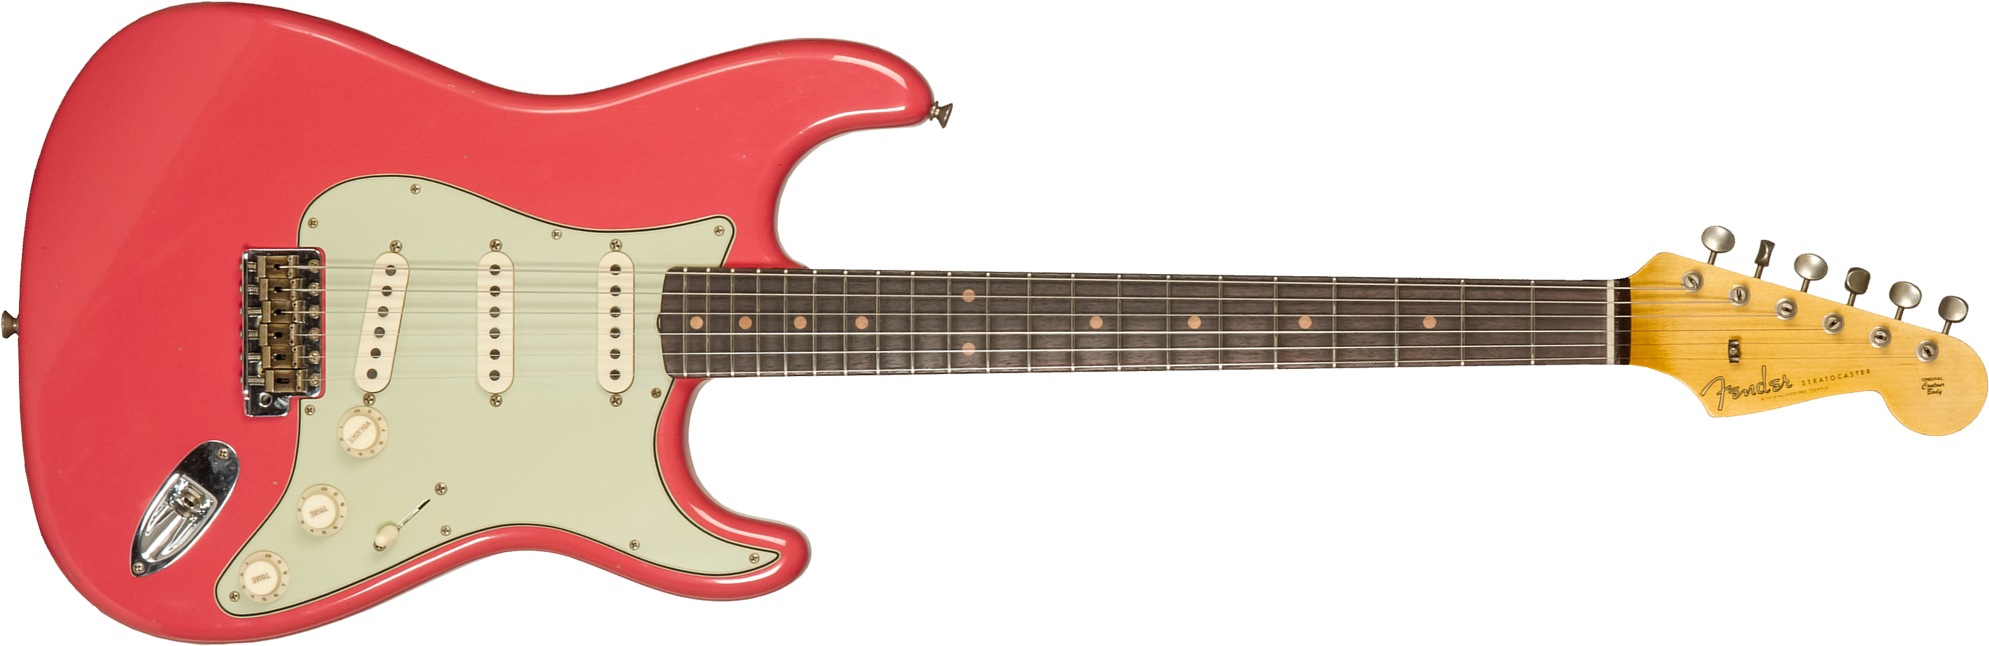 Fender Custom Shop Strat 1959 3s Trem Rw #cz571088 - Journeyman Relic Aged Fiesta Red - Str shape electric guitar - Main picture